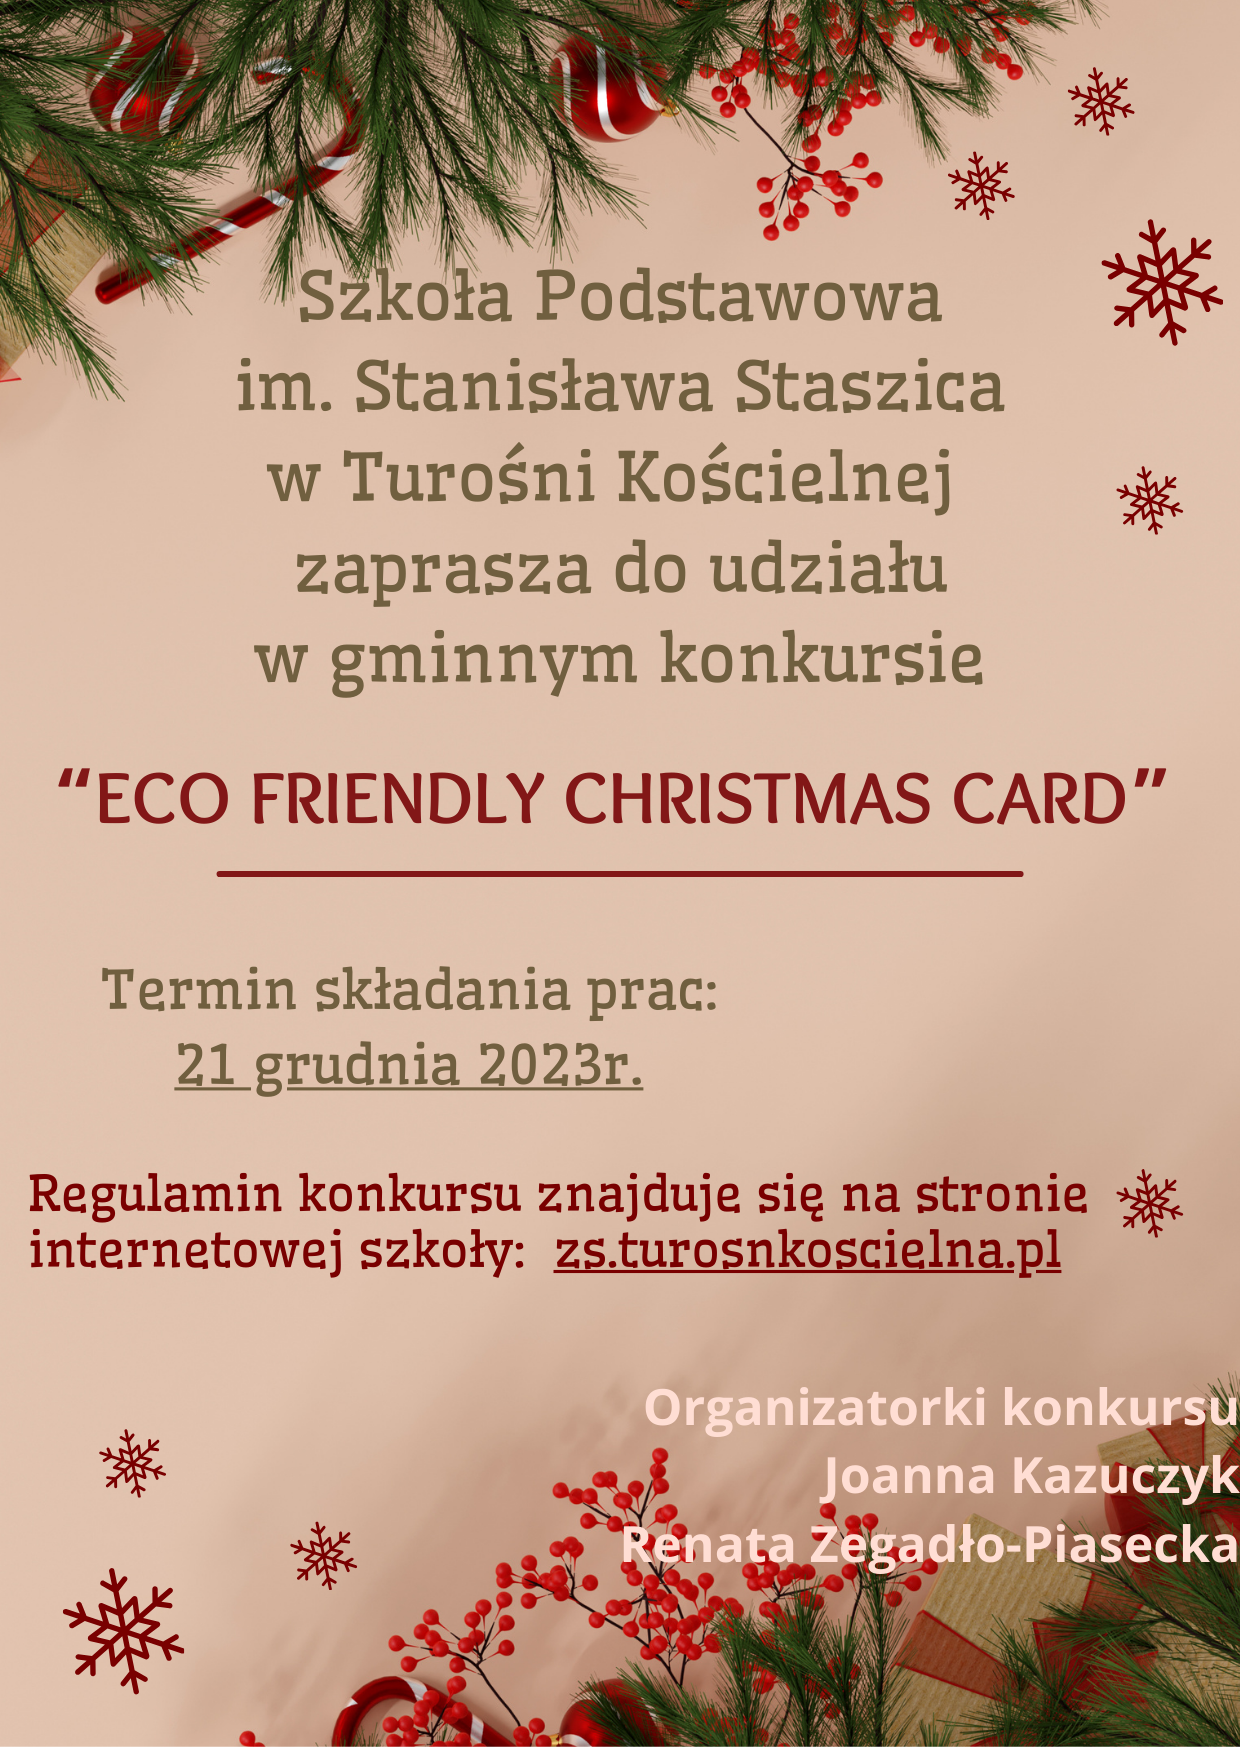 Eco friendly Christmas Card plakat konkursowy 1